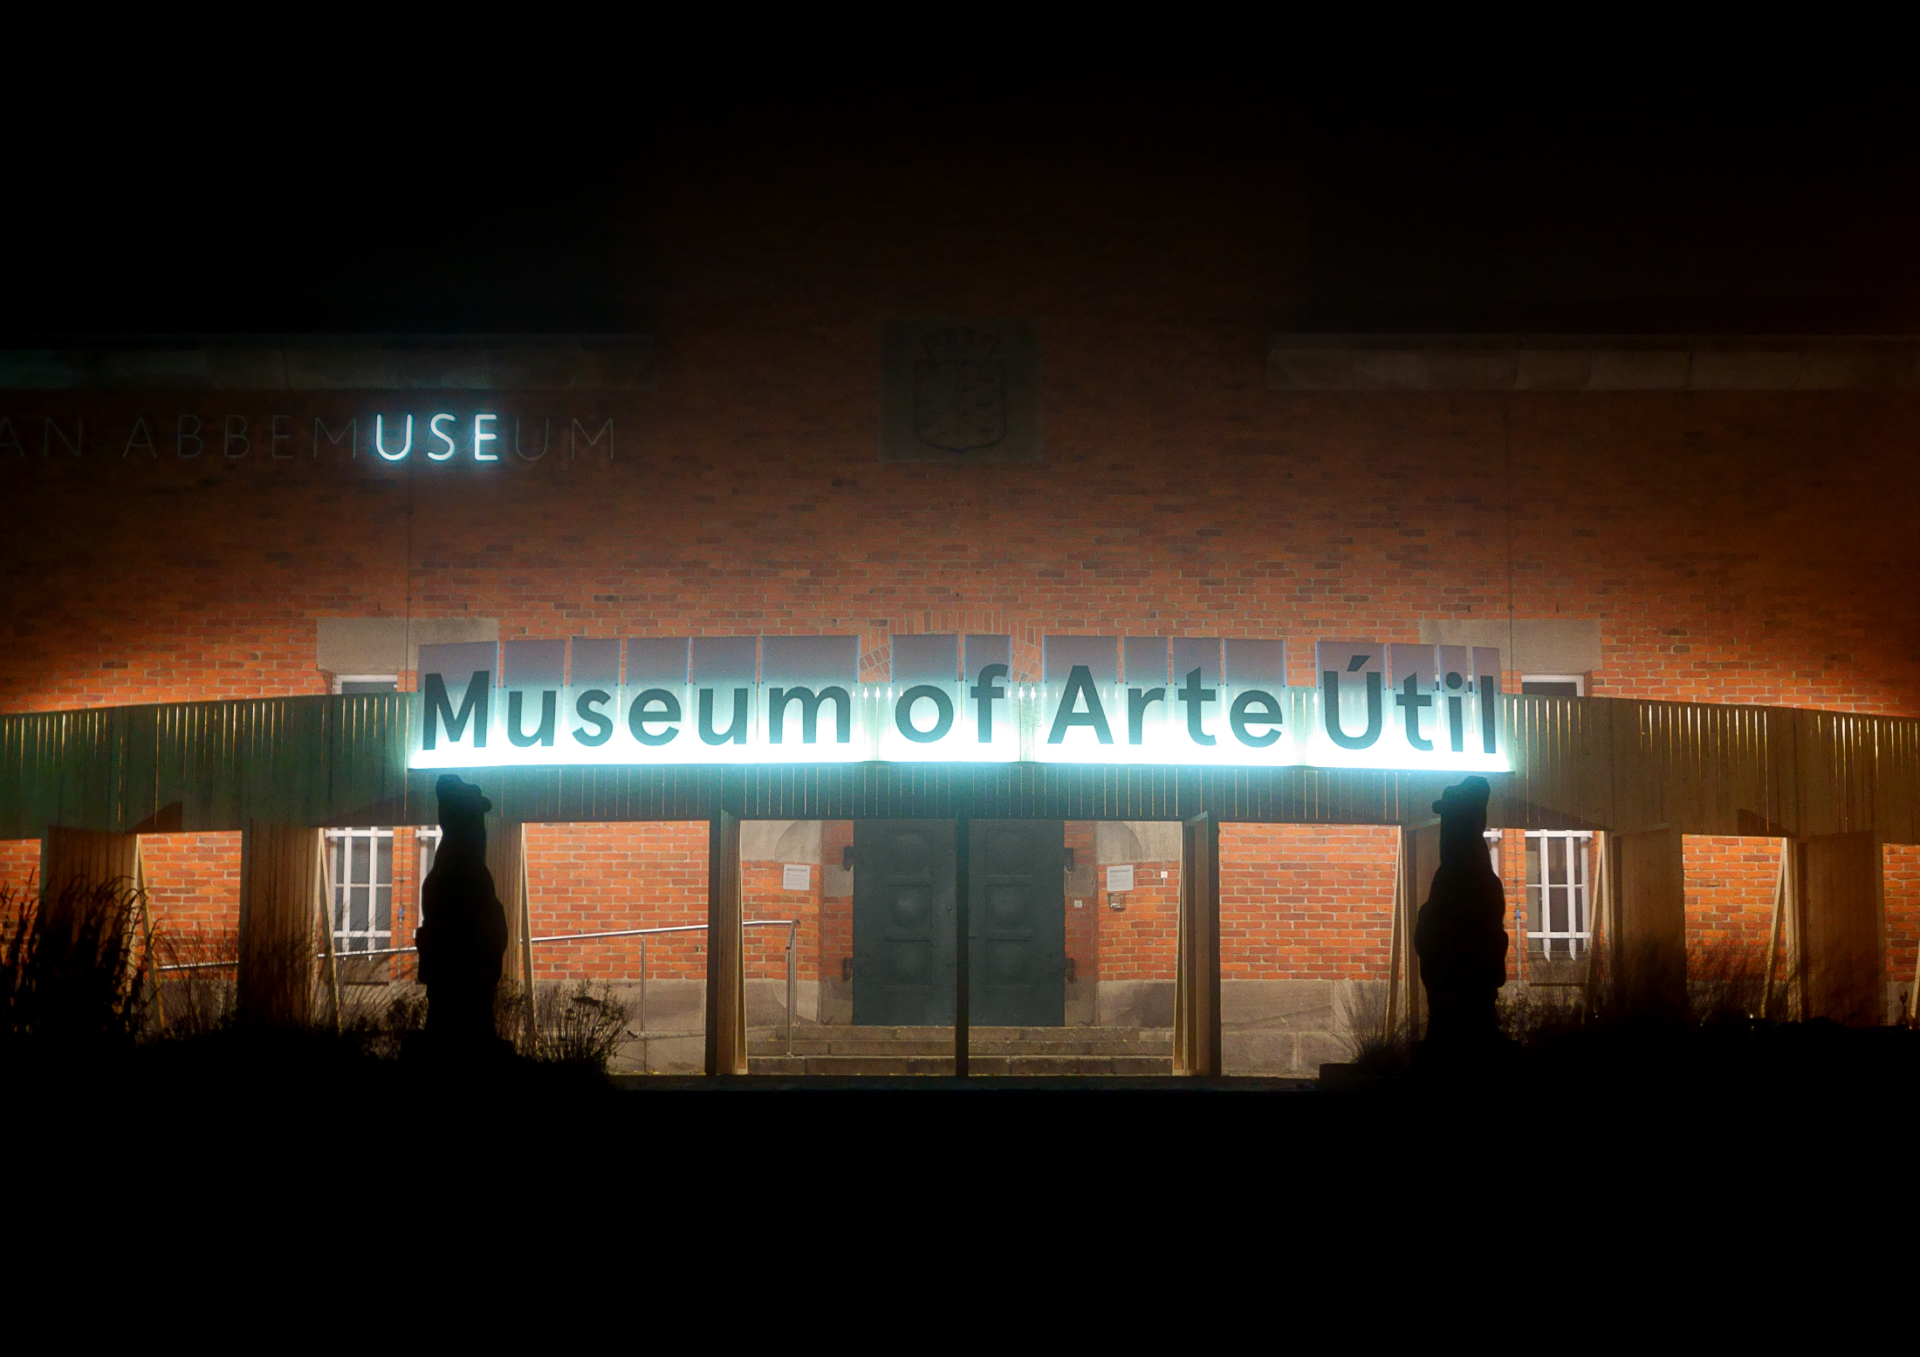 Museum of Arte Util